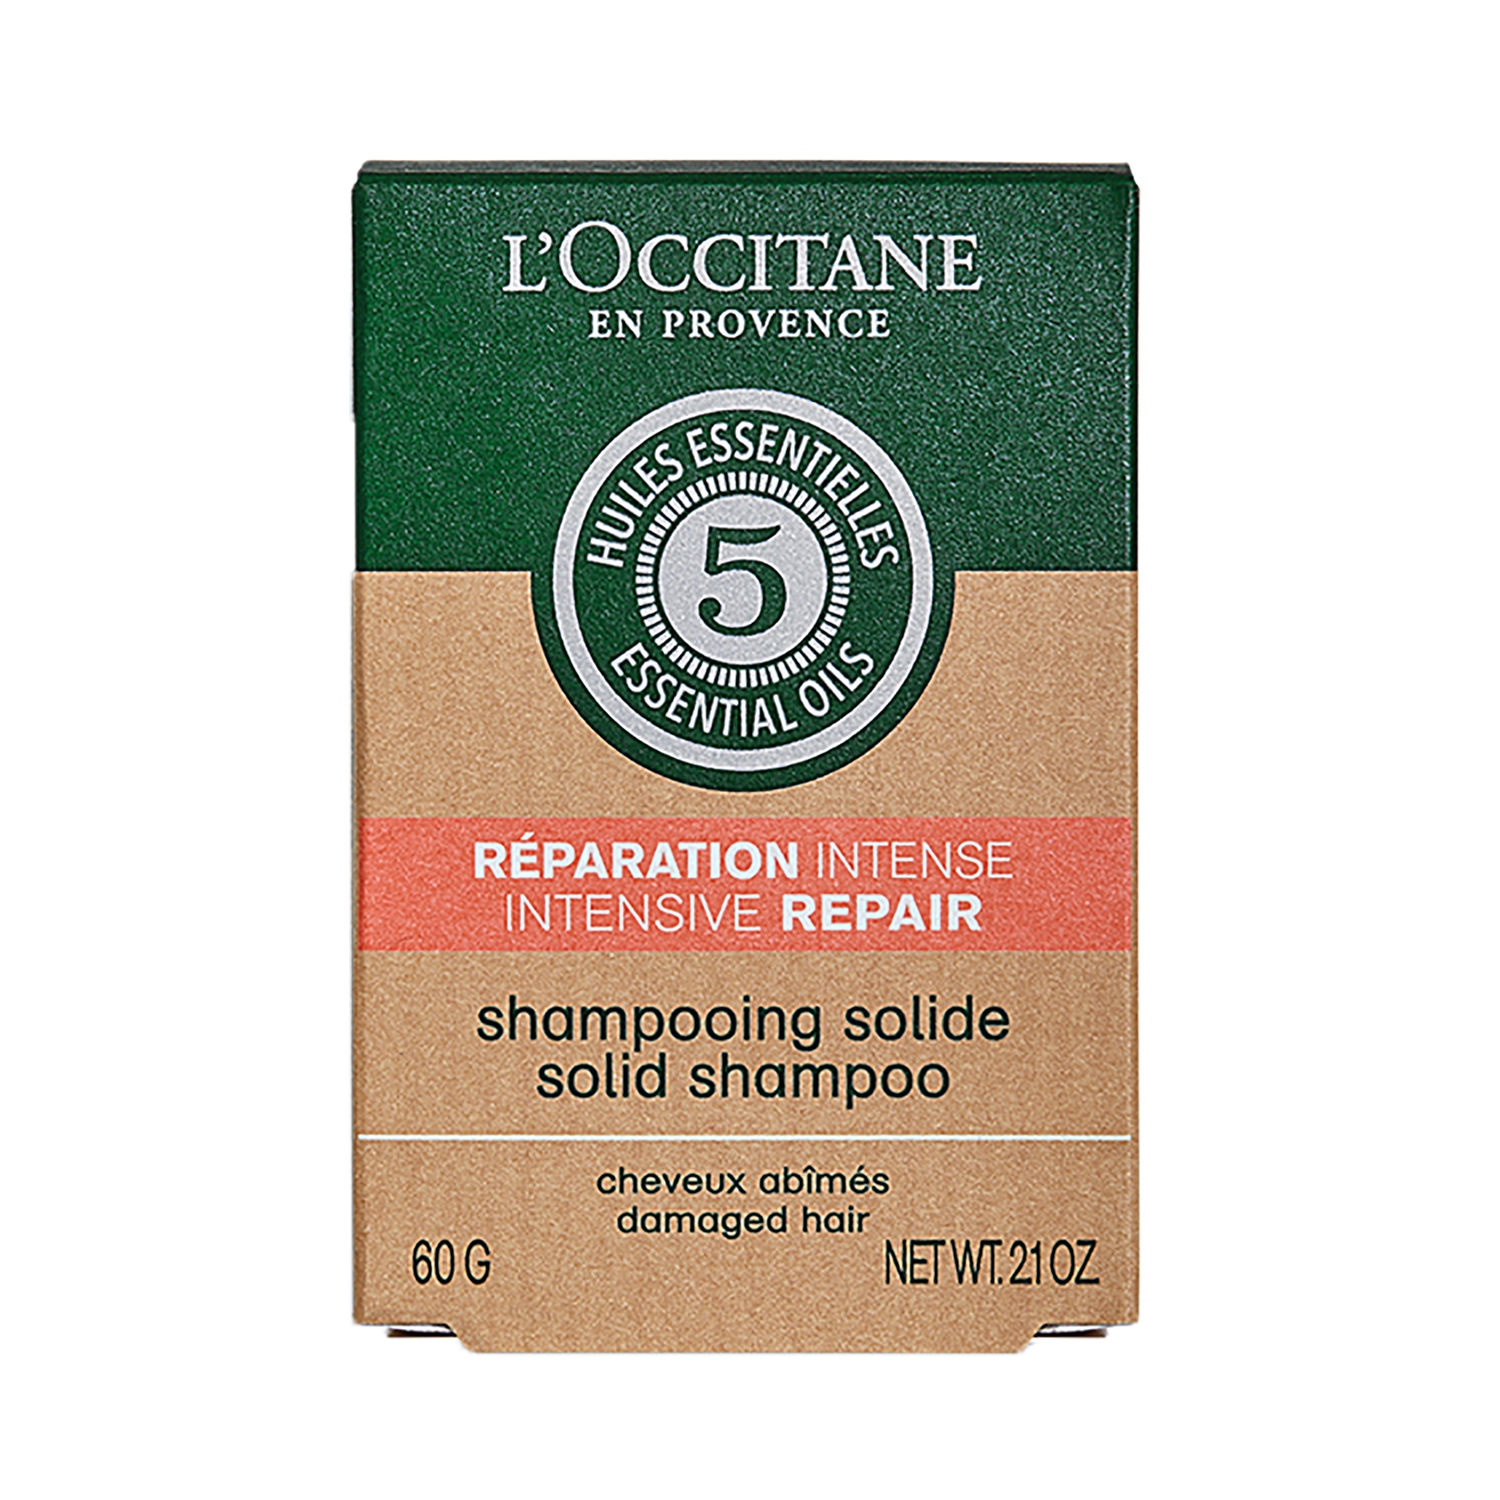 L'occitane Intensive Repair Solid Shampoo (60g)